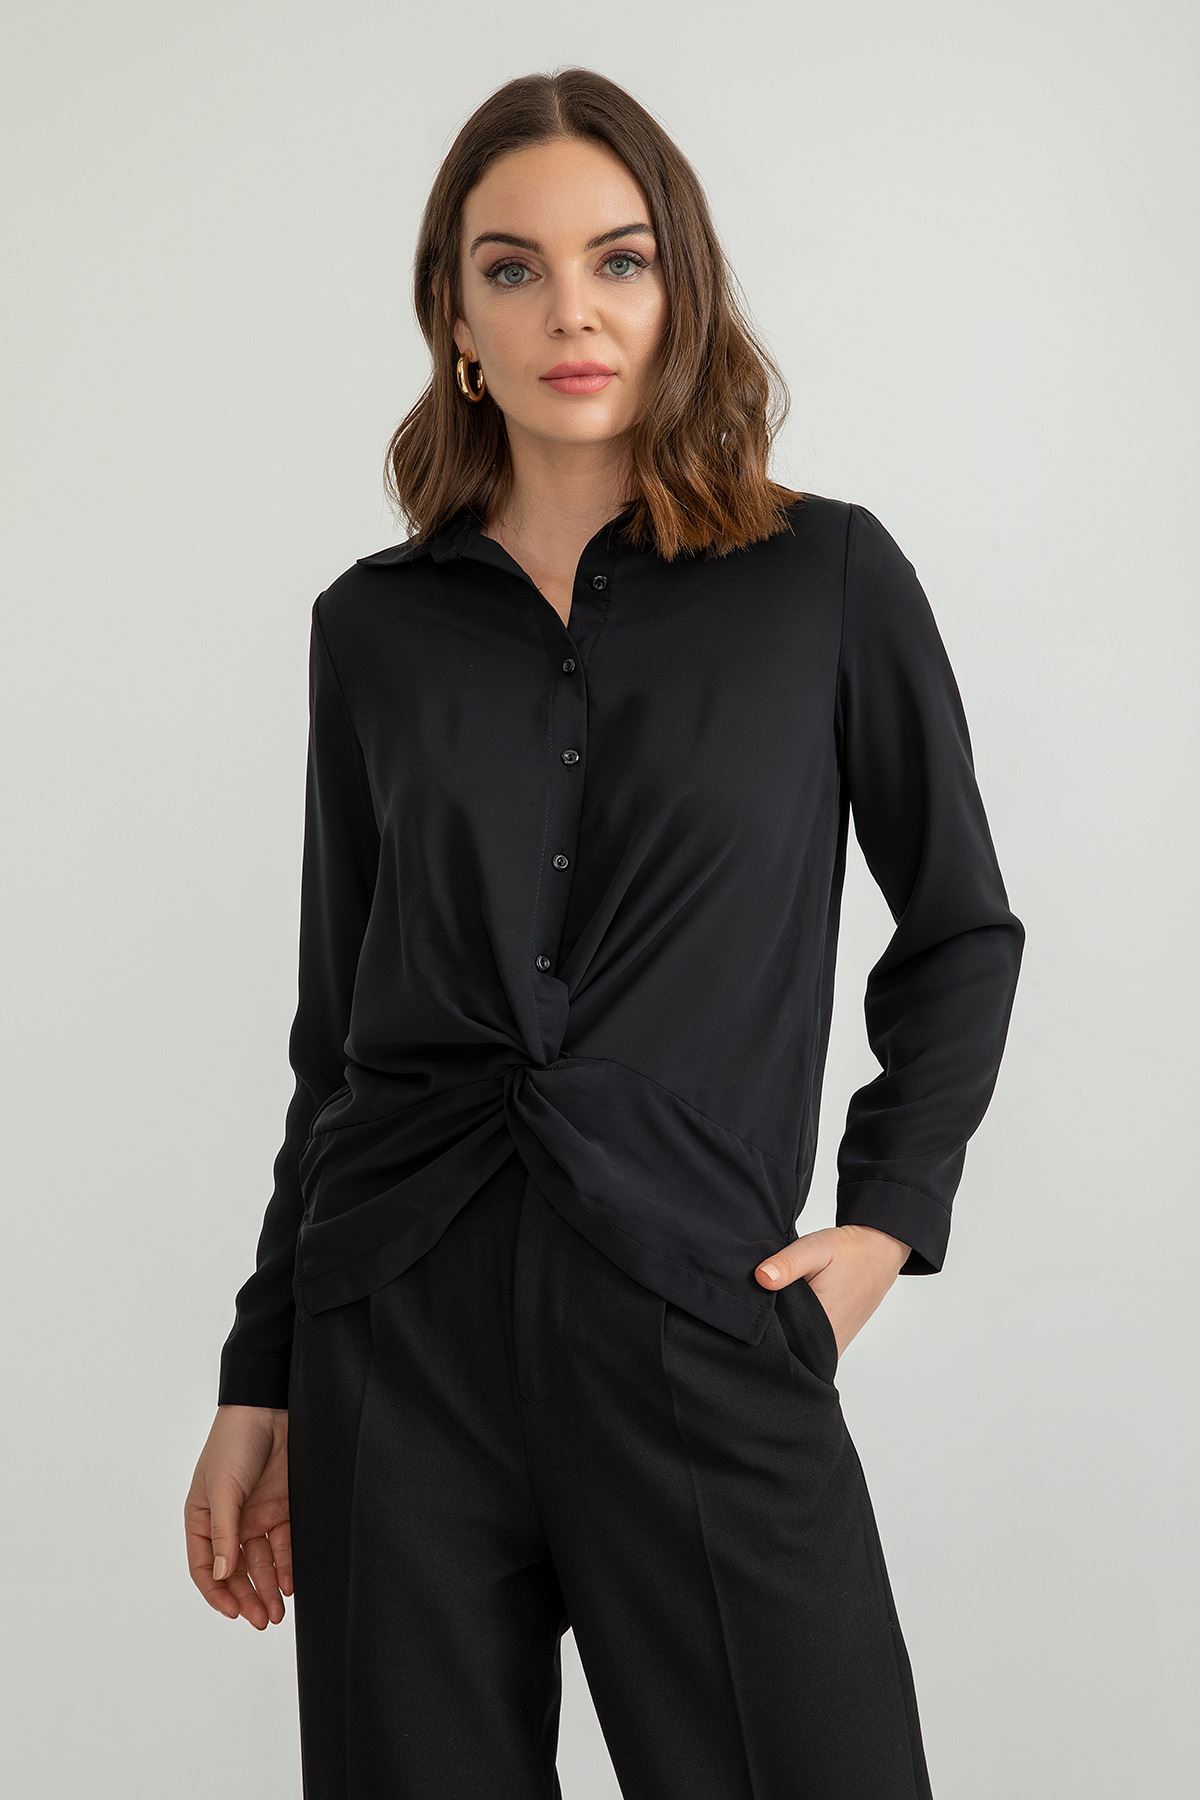 Jesica Fabric Long Sleeve Classical Button Front Women'S Shirt - Black